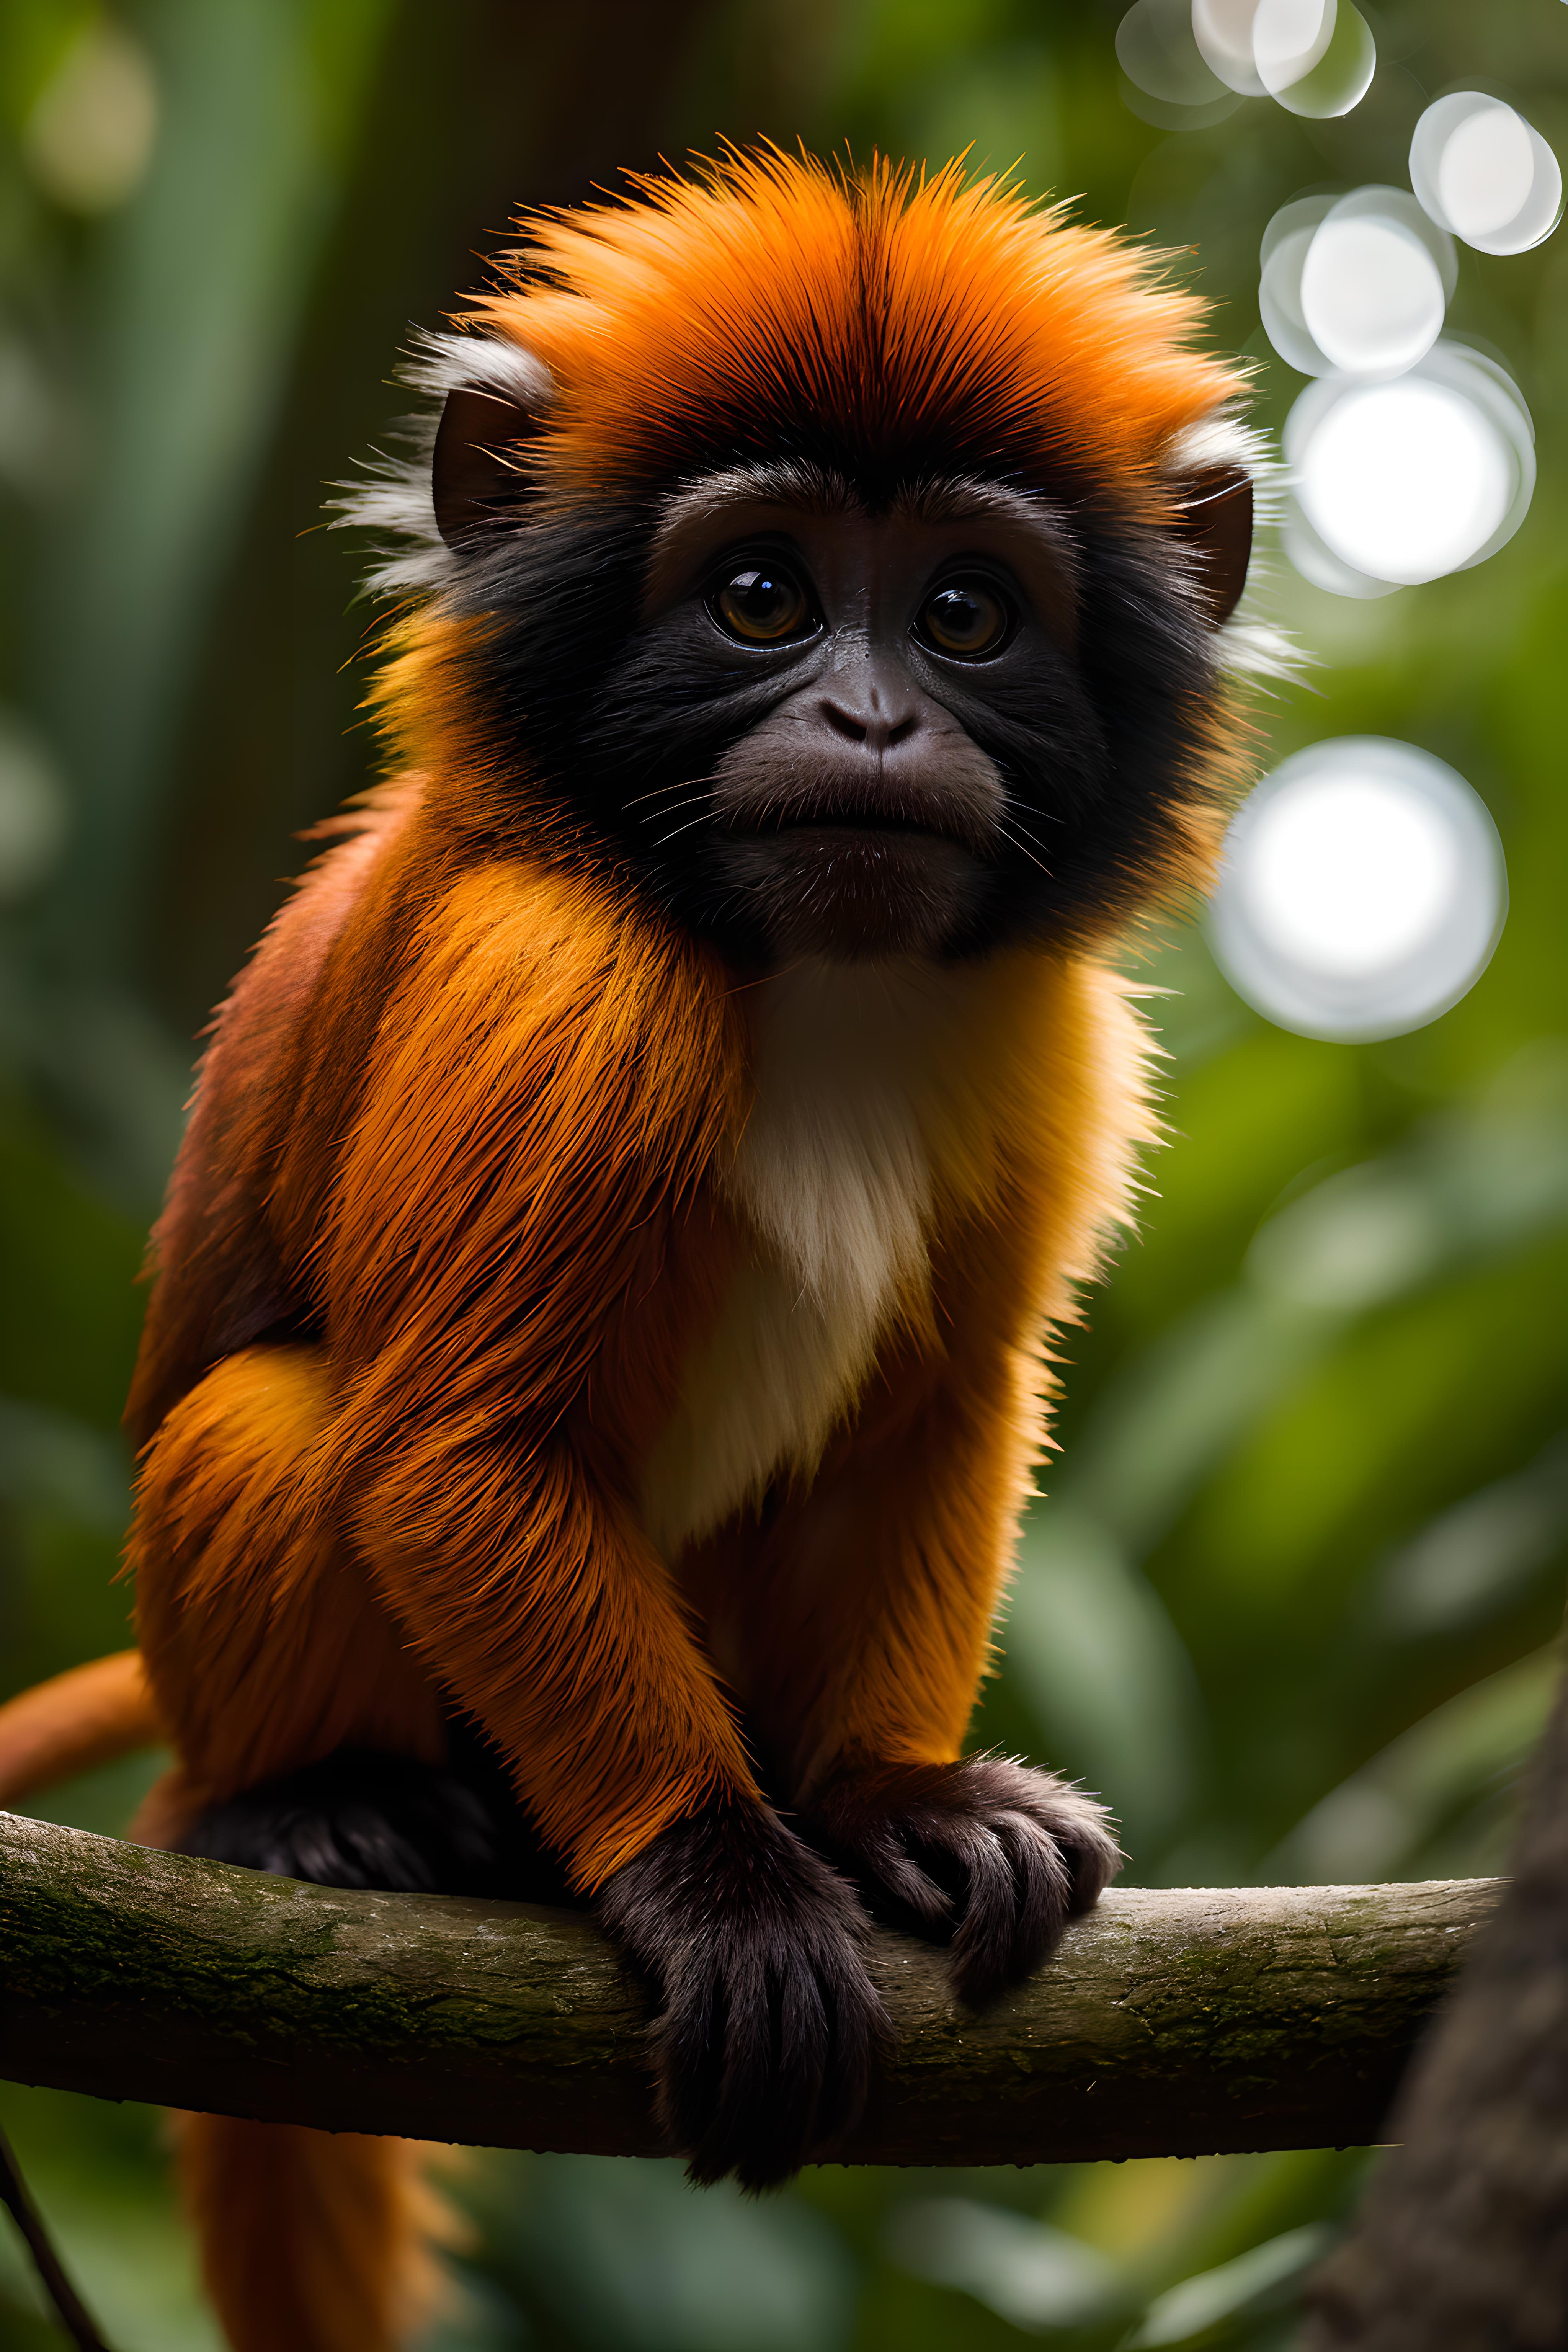 An orange and black monkey sitting on a tree branch.